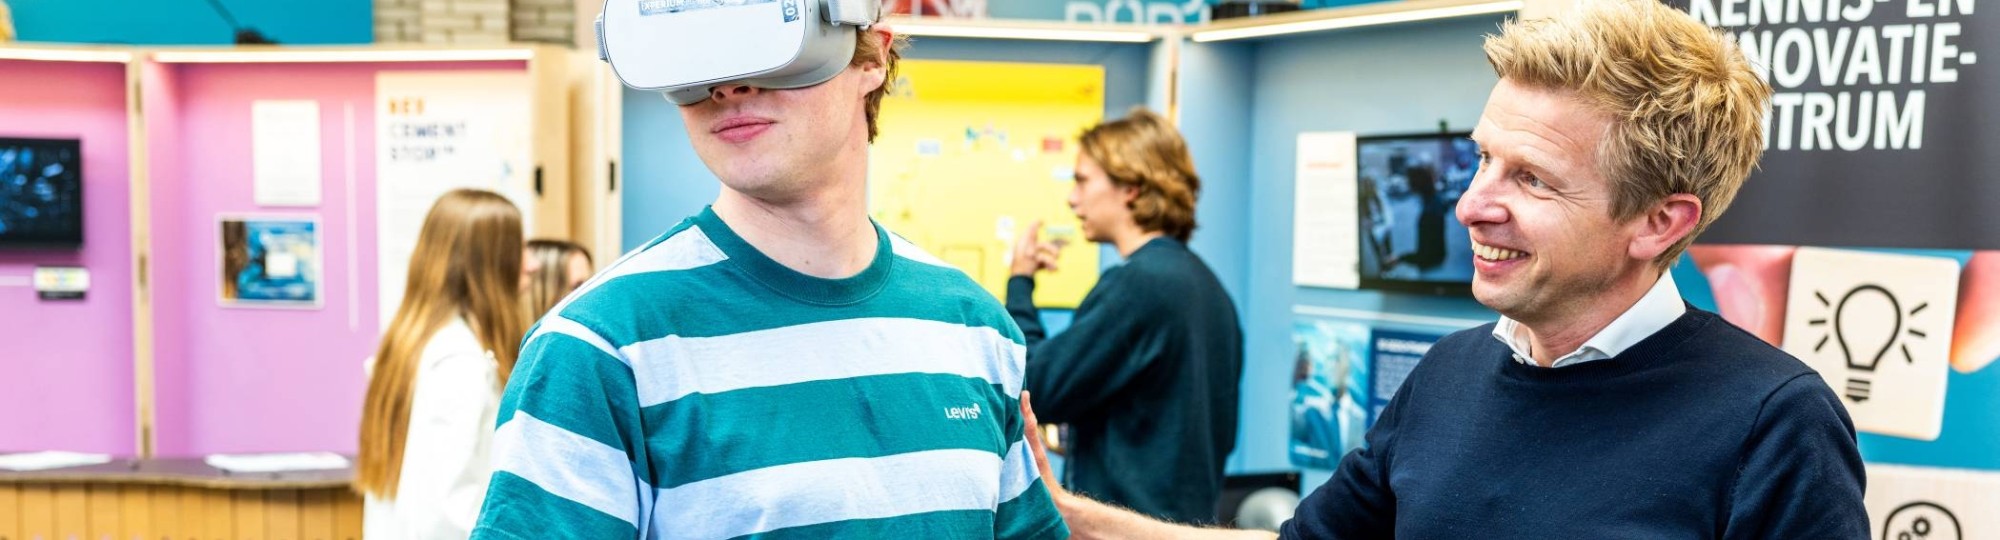 ondernemerslab nijmegen VR-bril